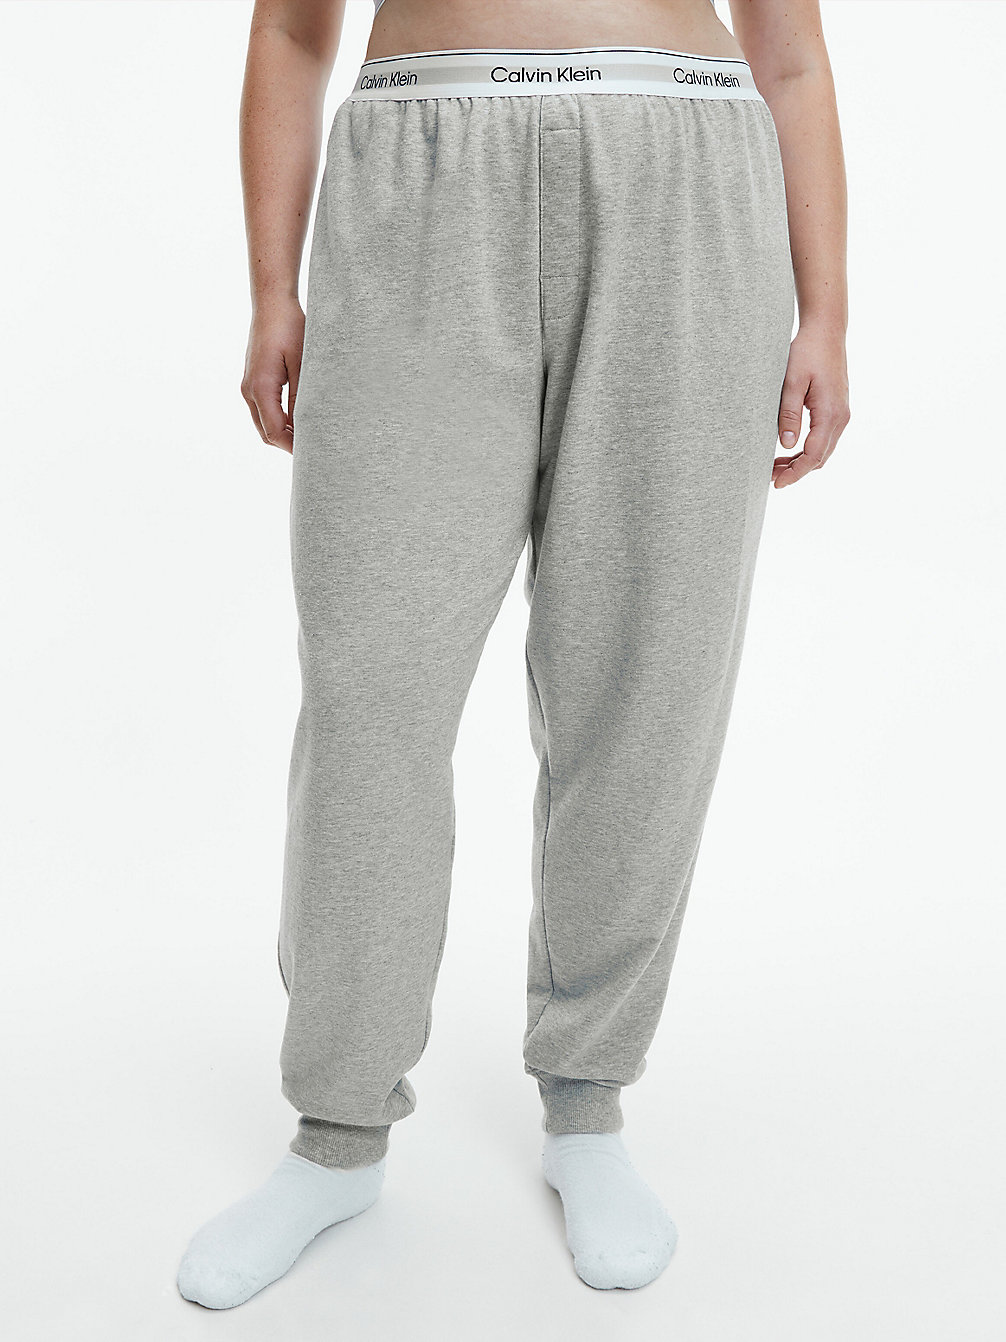 GREY HEATHER Plus Size Pyjama Pants - Modern Cotton undefined women Calvin Klein